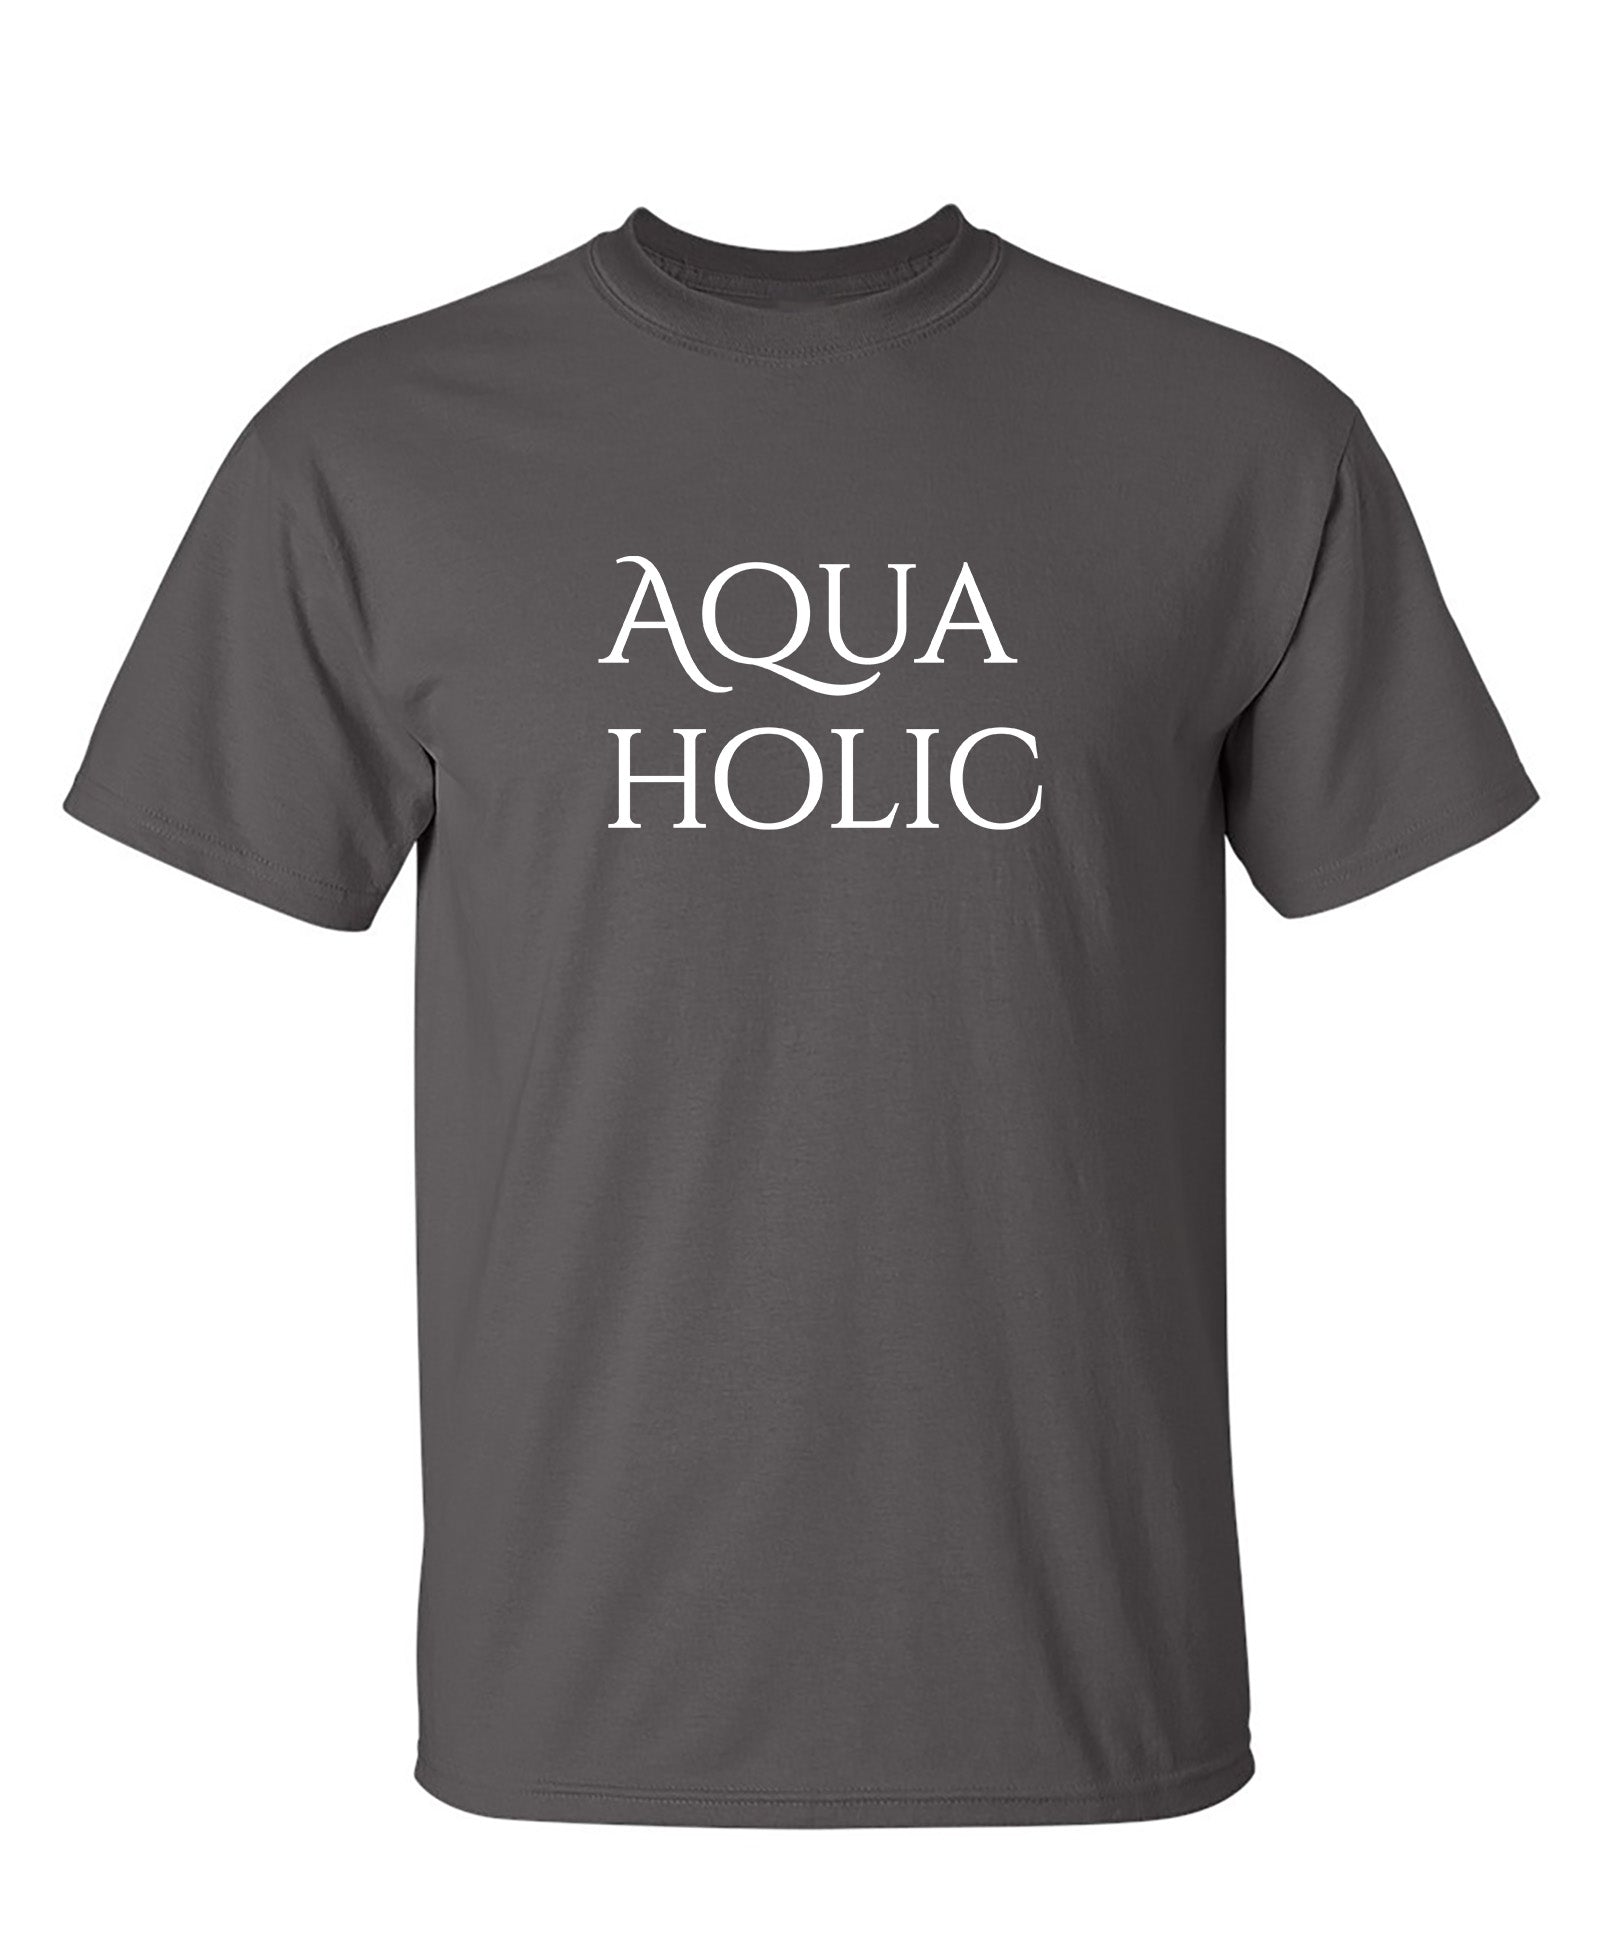 Aqua Holic - Funny T Shirts & Graphic Tees